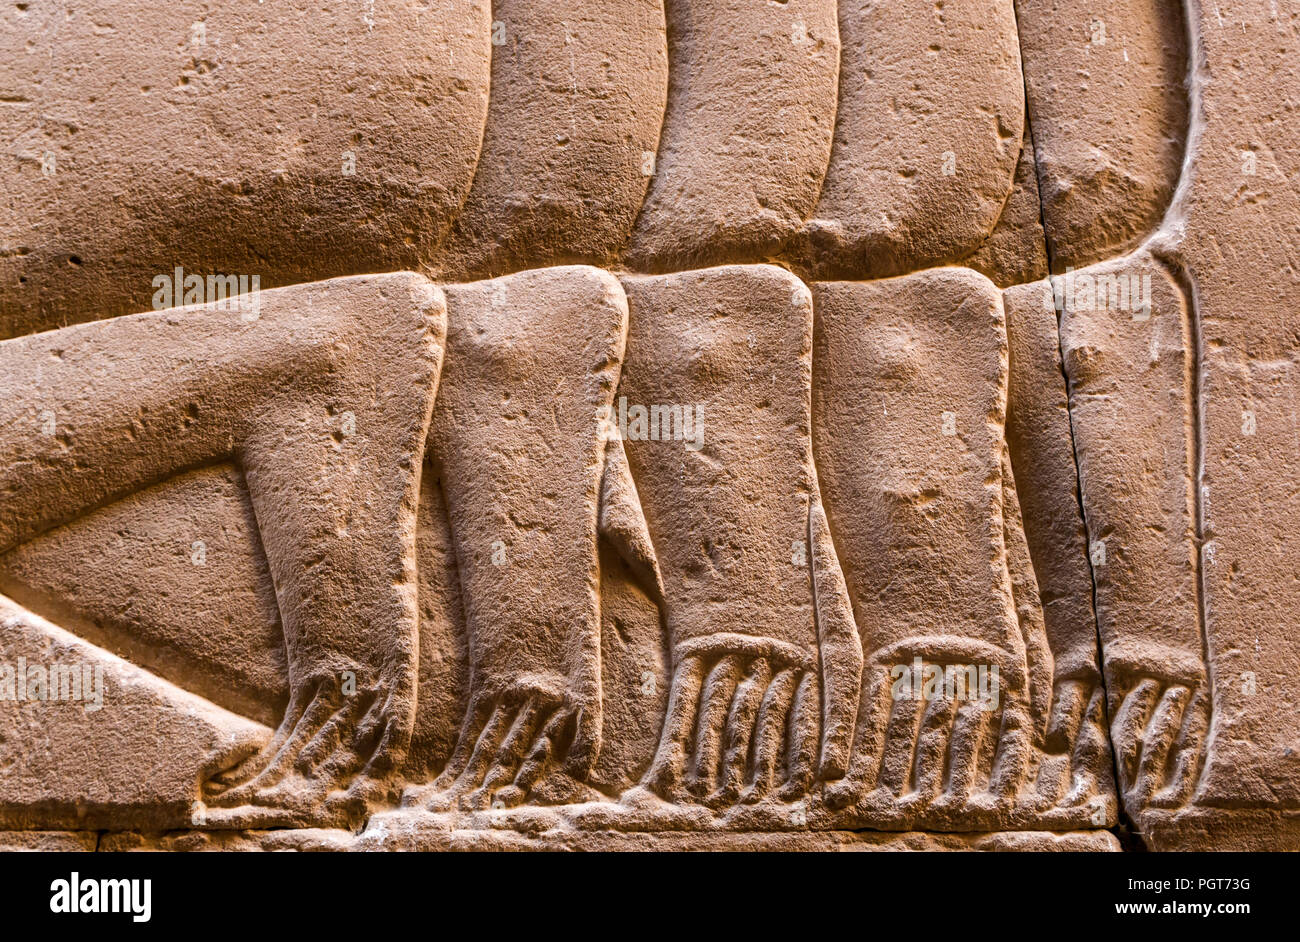 Close up detail of human feet and toes of kneeling figures in Egyptian hieroglyph, Edfu Temple, Edfu, Egypt, Africa Stock Photo